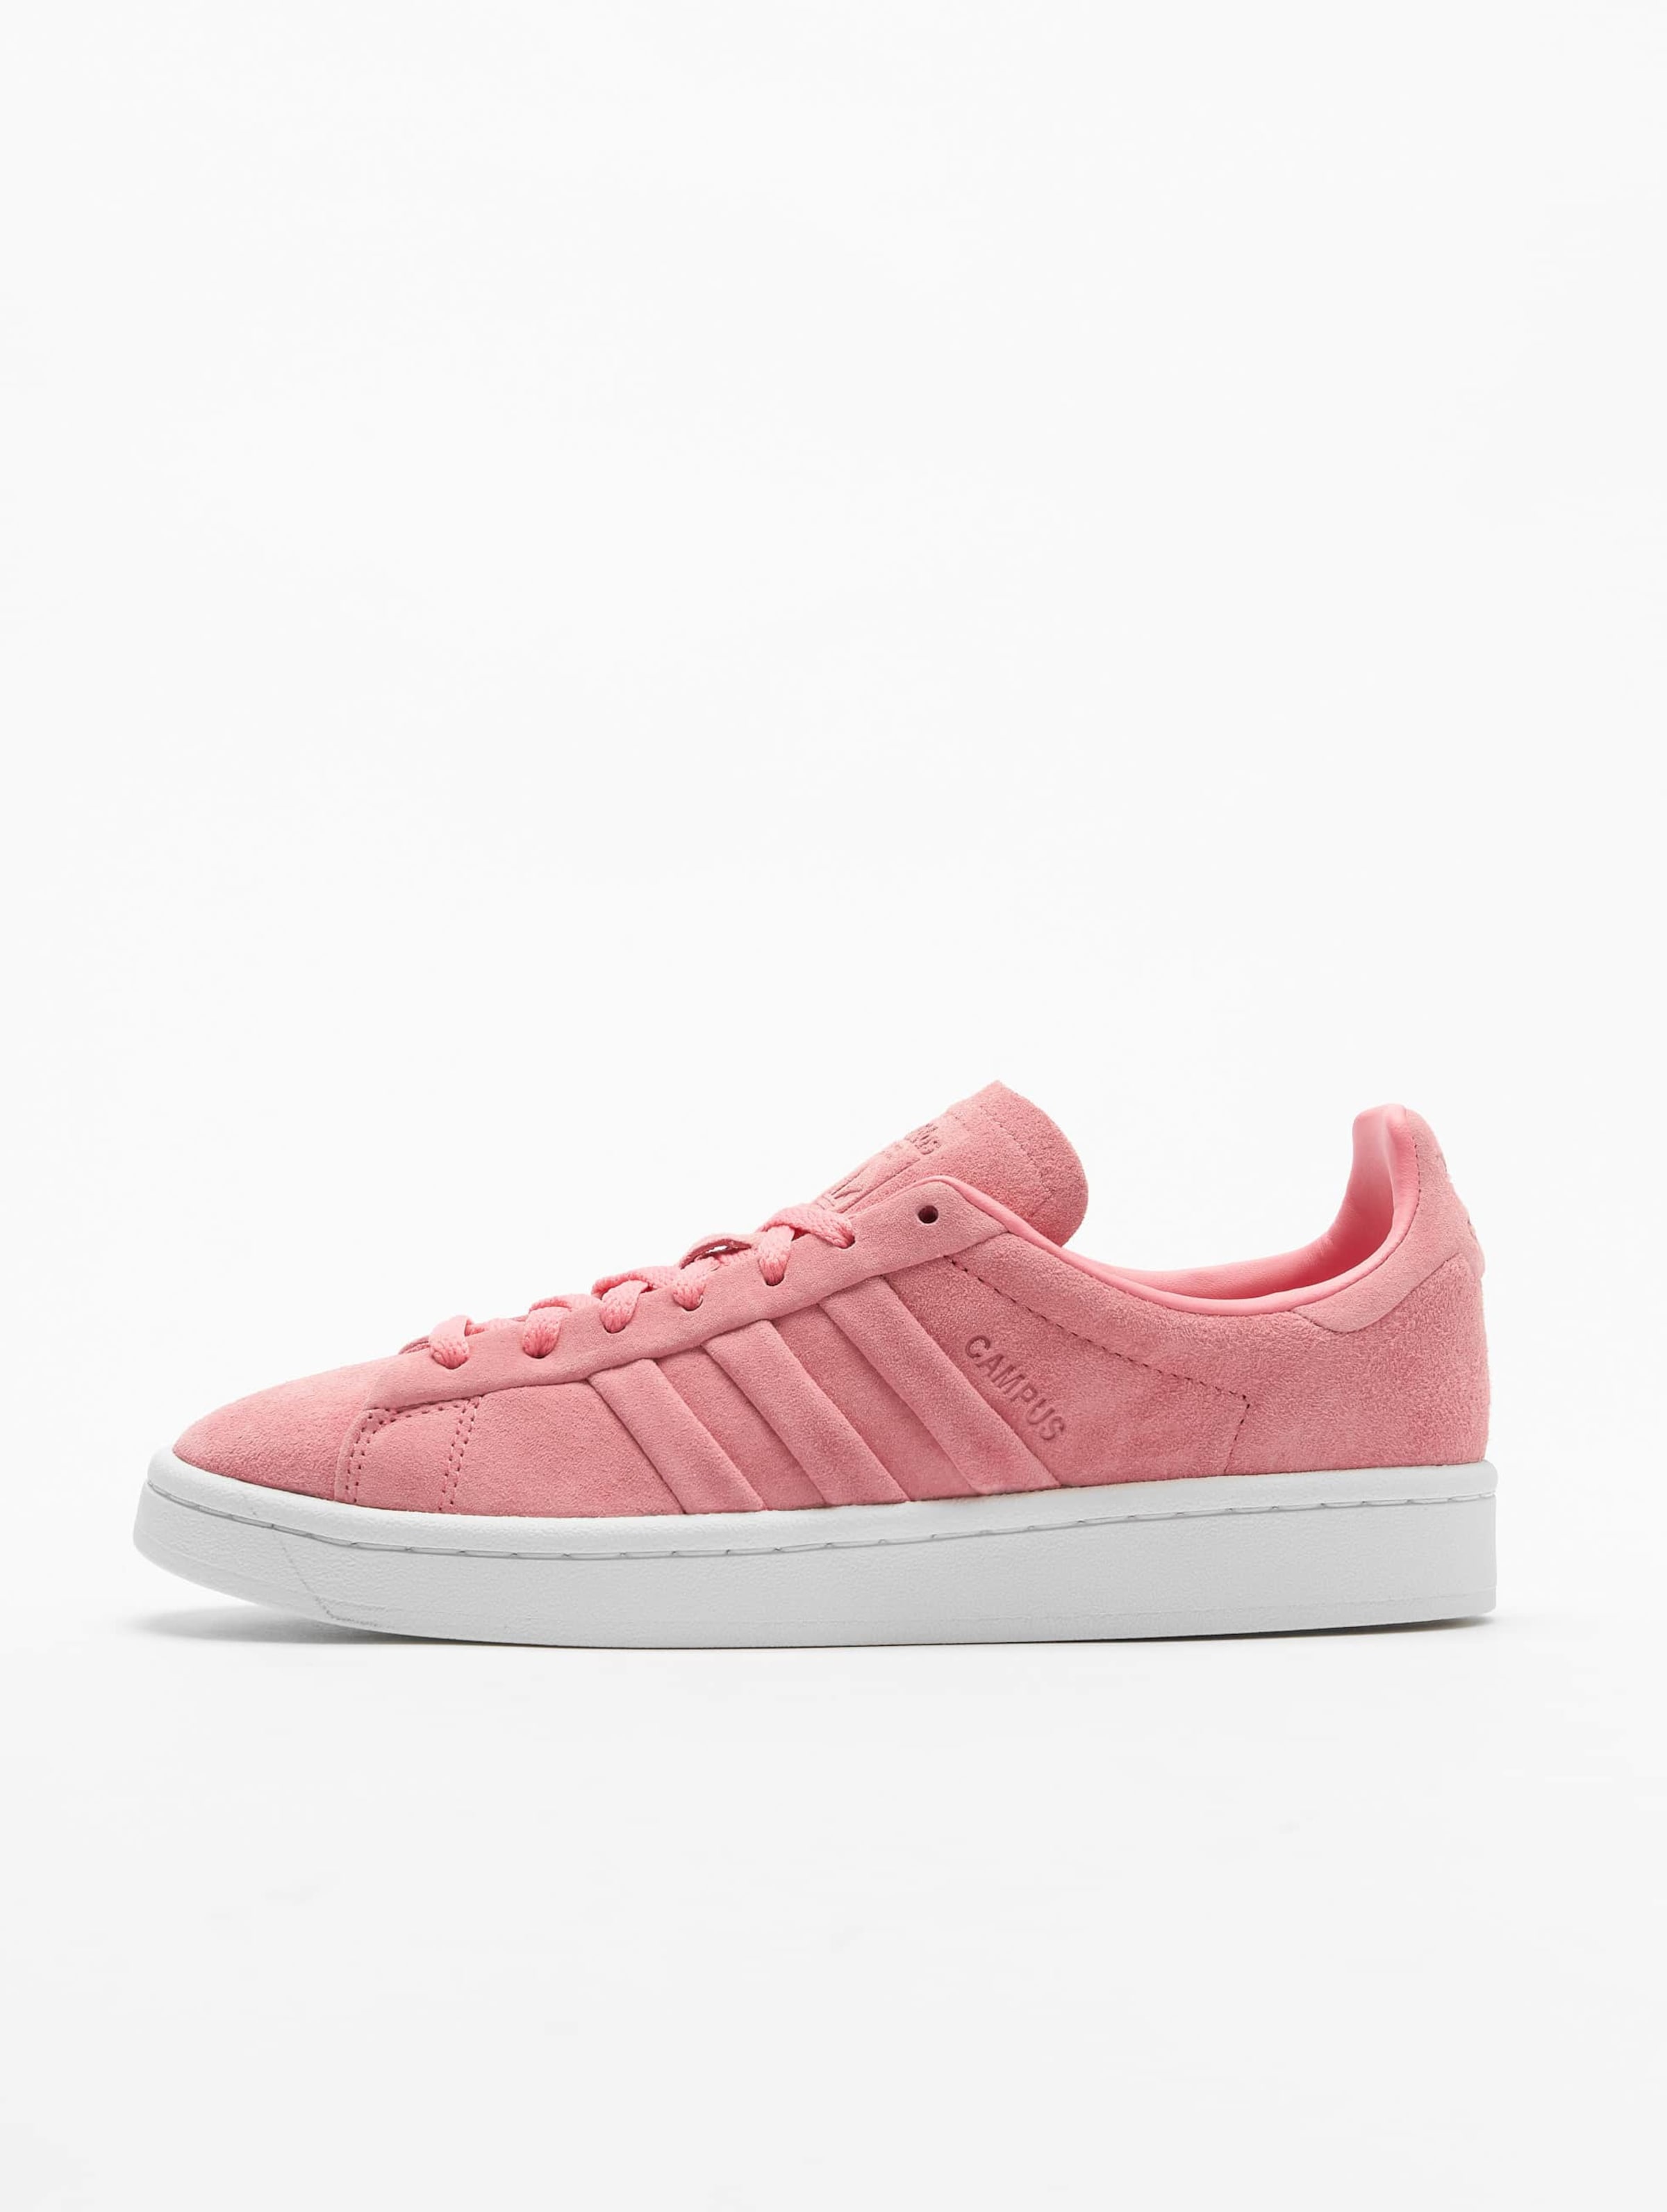 adidas Originals Campus Stitch And Turn Sneaker Vrouwen op kleur roze, Maat 36